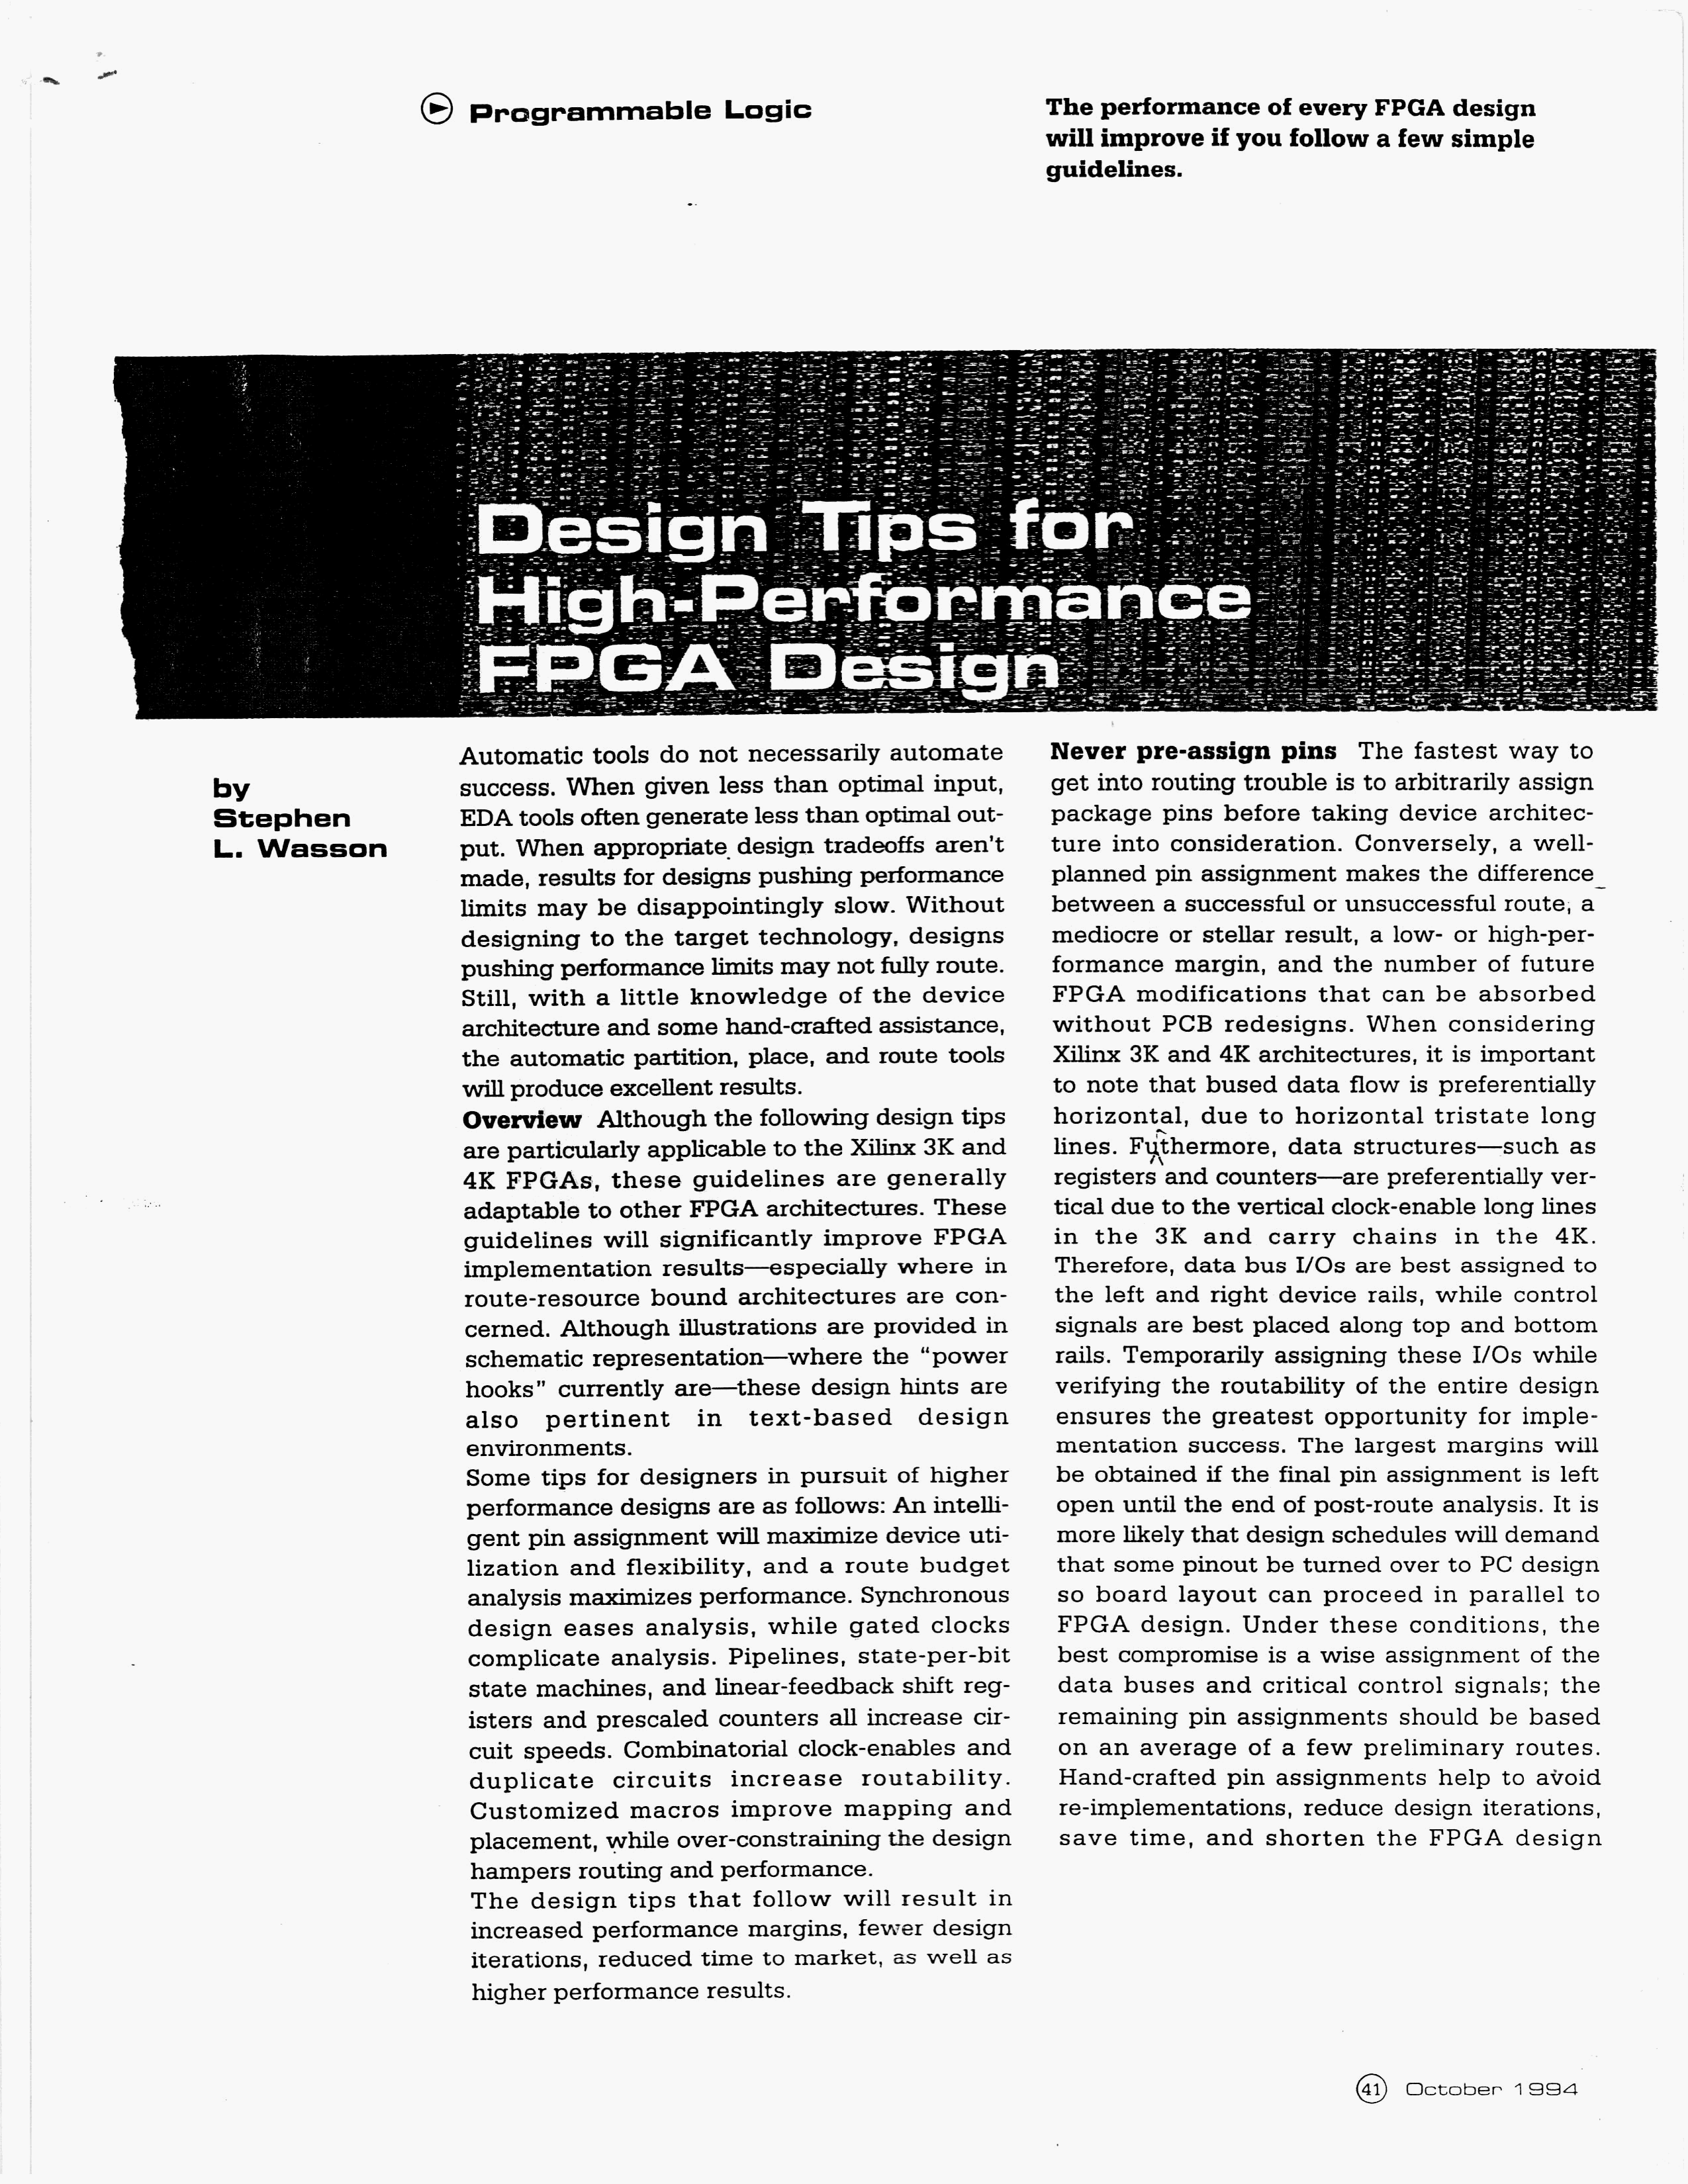 * Design Tips for High-Performance FPGA Design, Stephen Wasson, October 1994, ASIC & EDA page 1 *